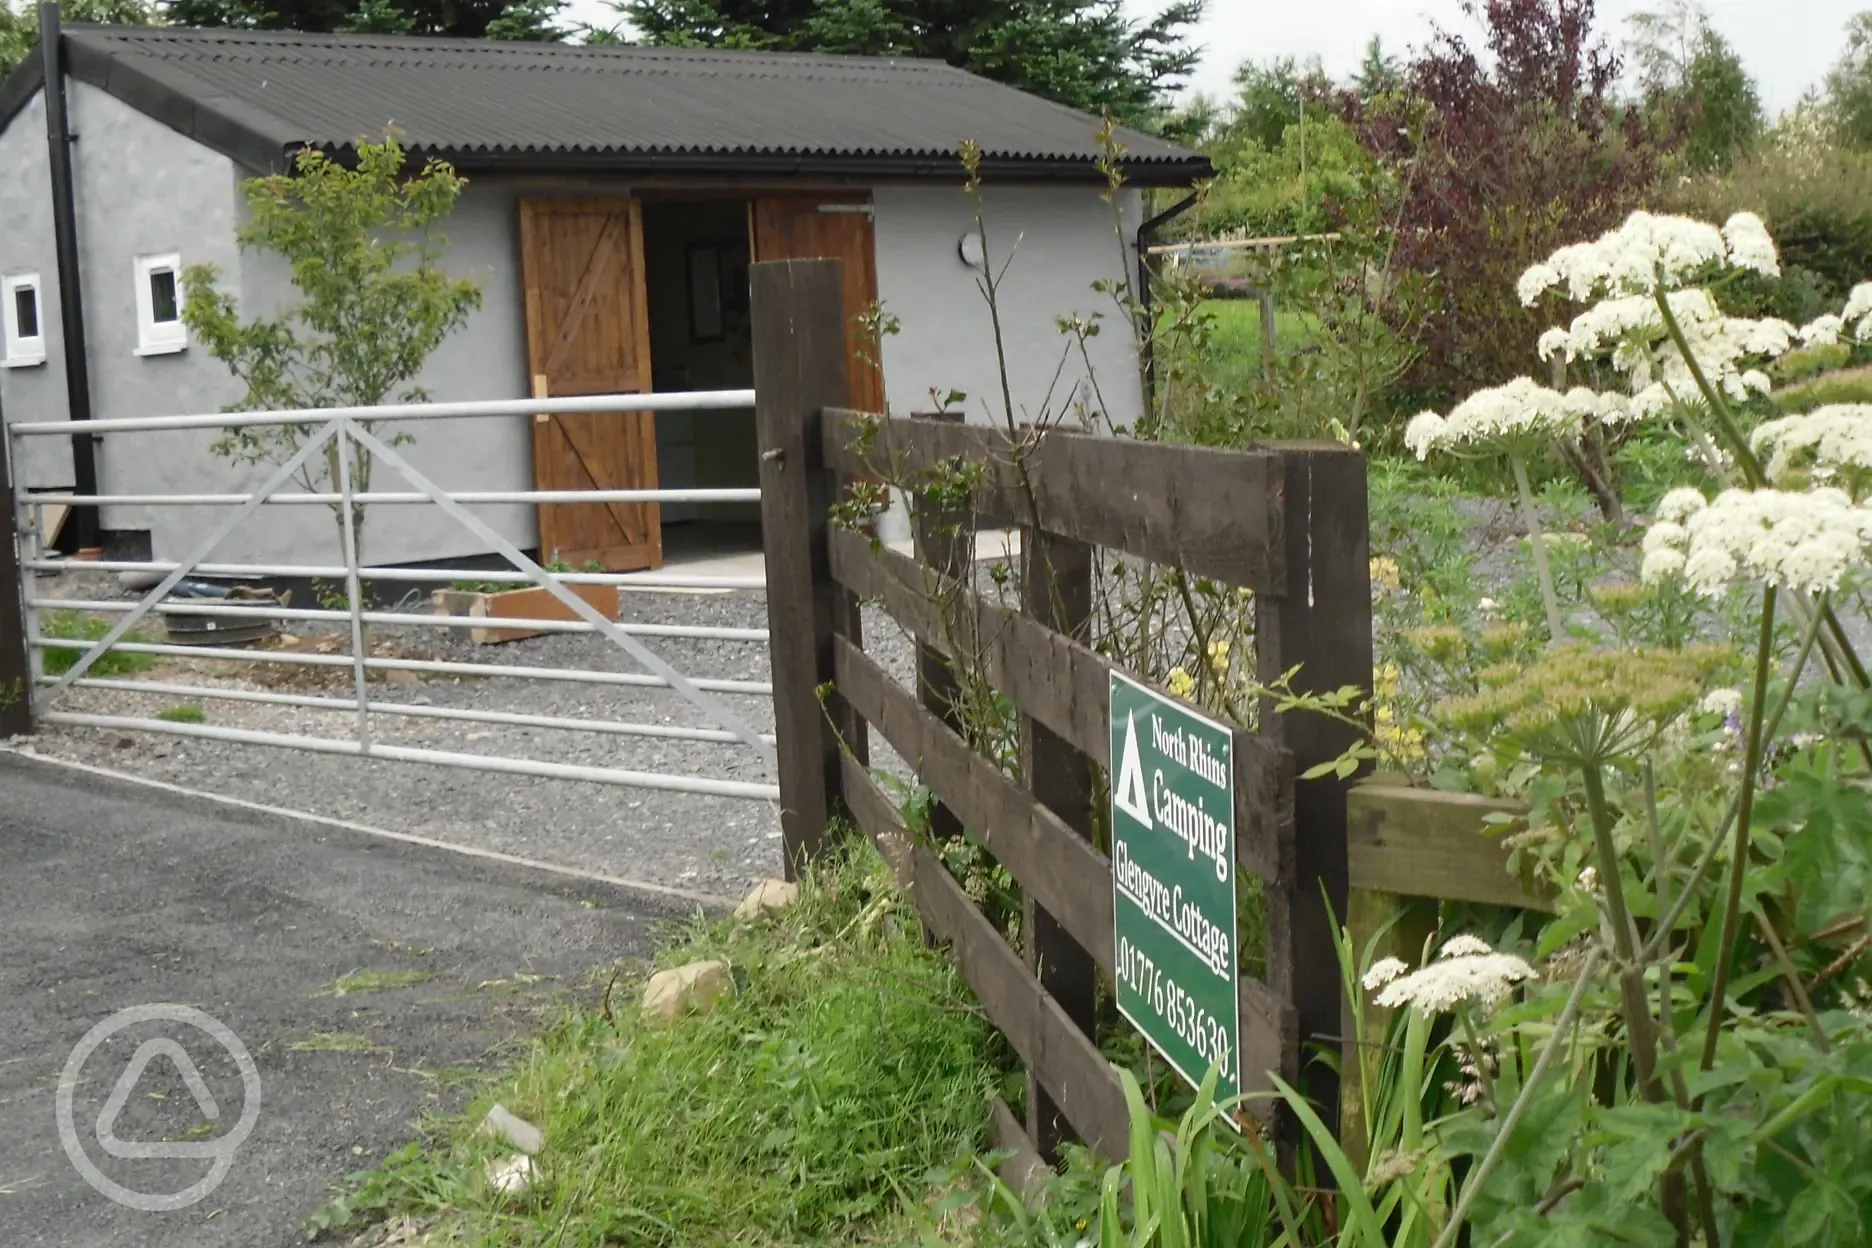 Campsite entrance with facilities block